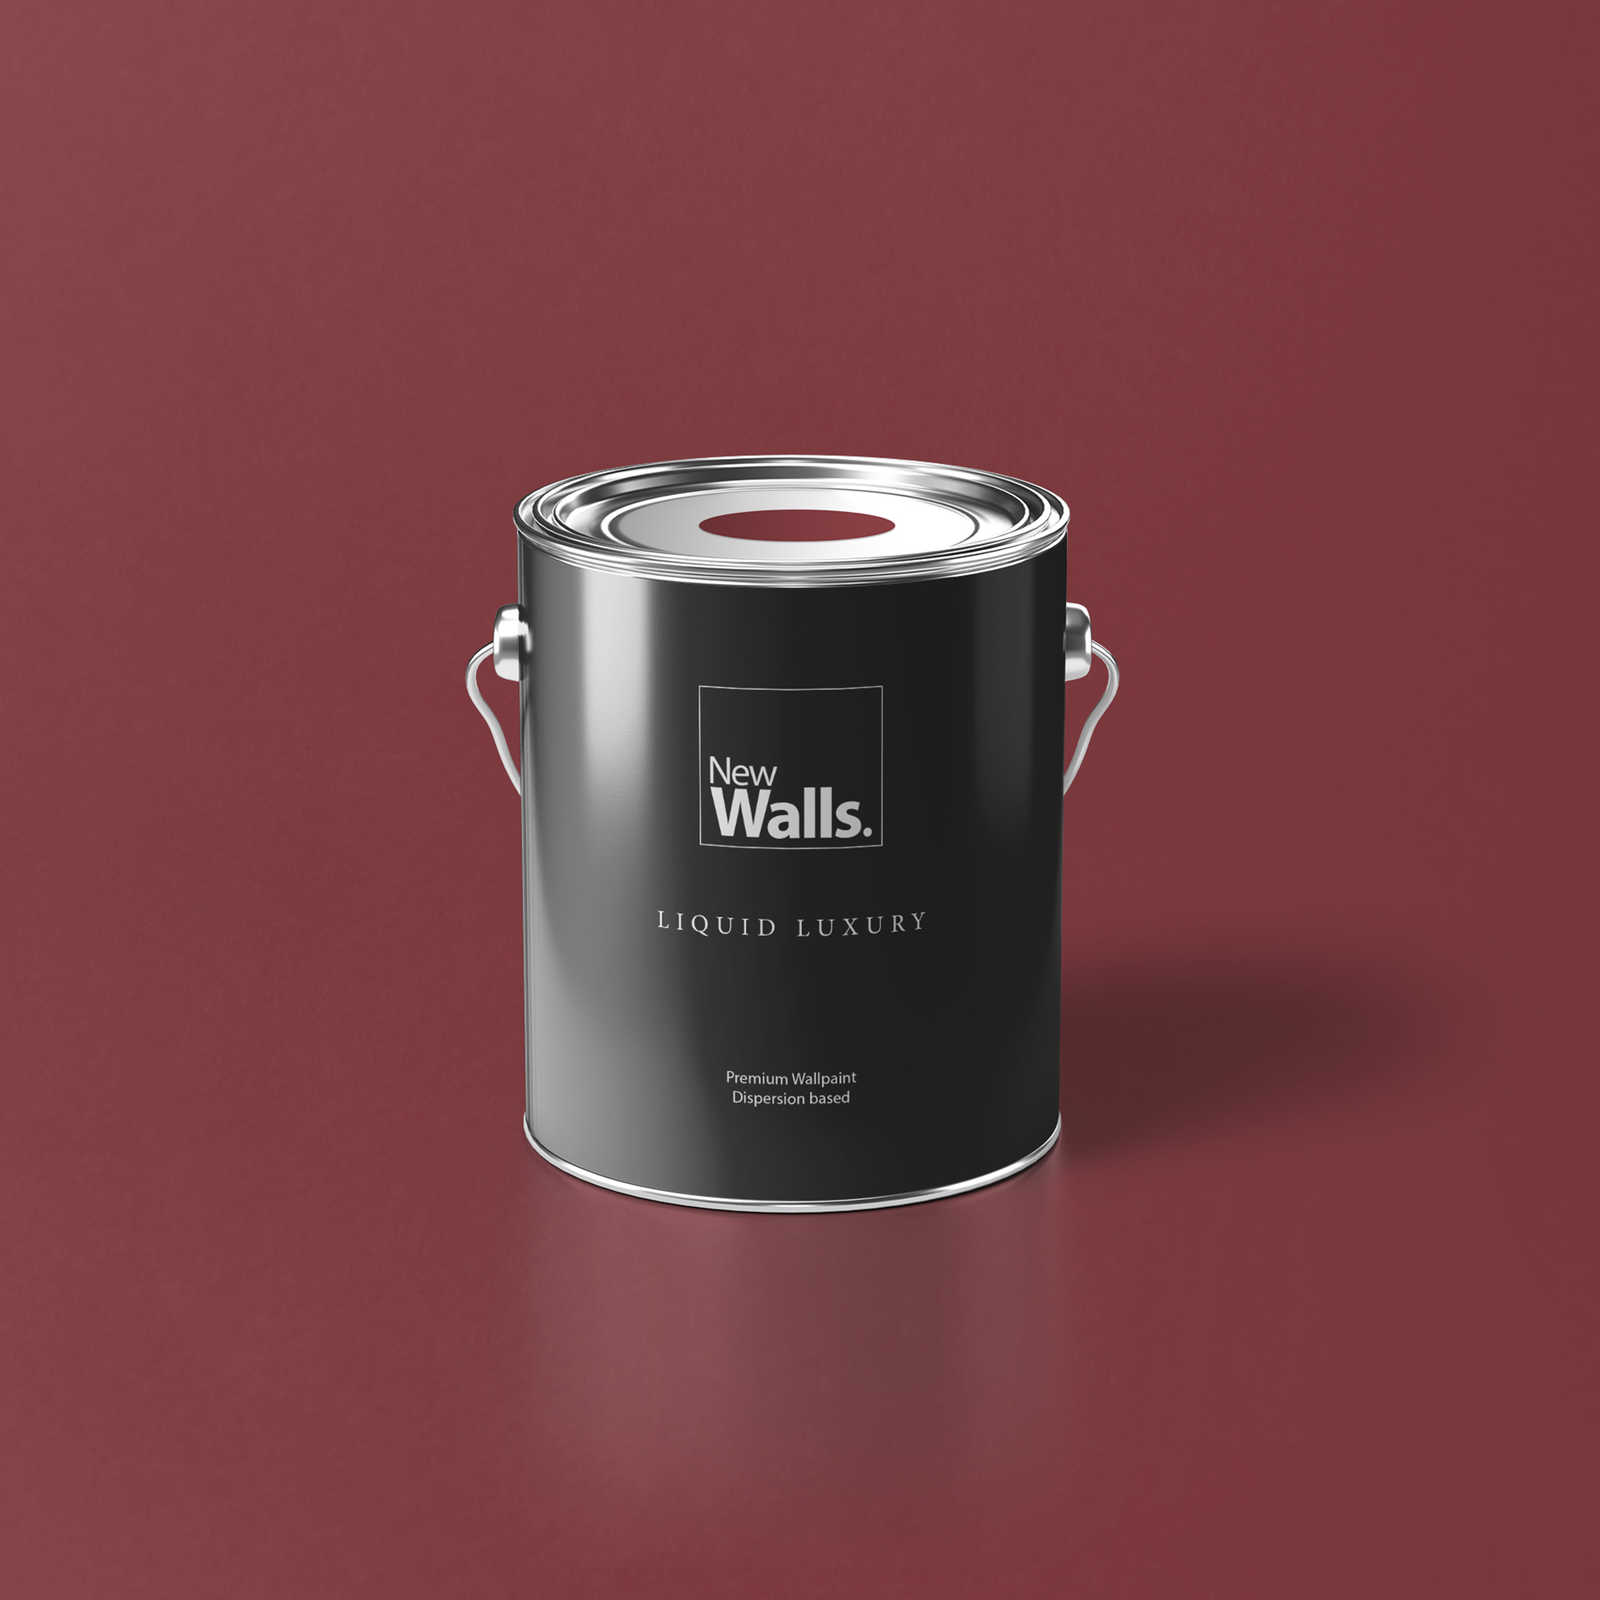 Premium Wall Paint warm cherry red »Luxury Lipstick« NW1006 – 2.5 litre
